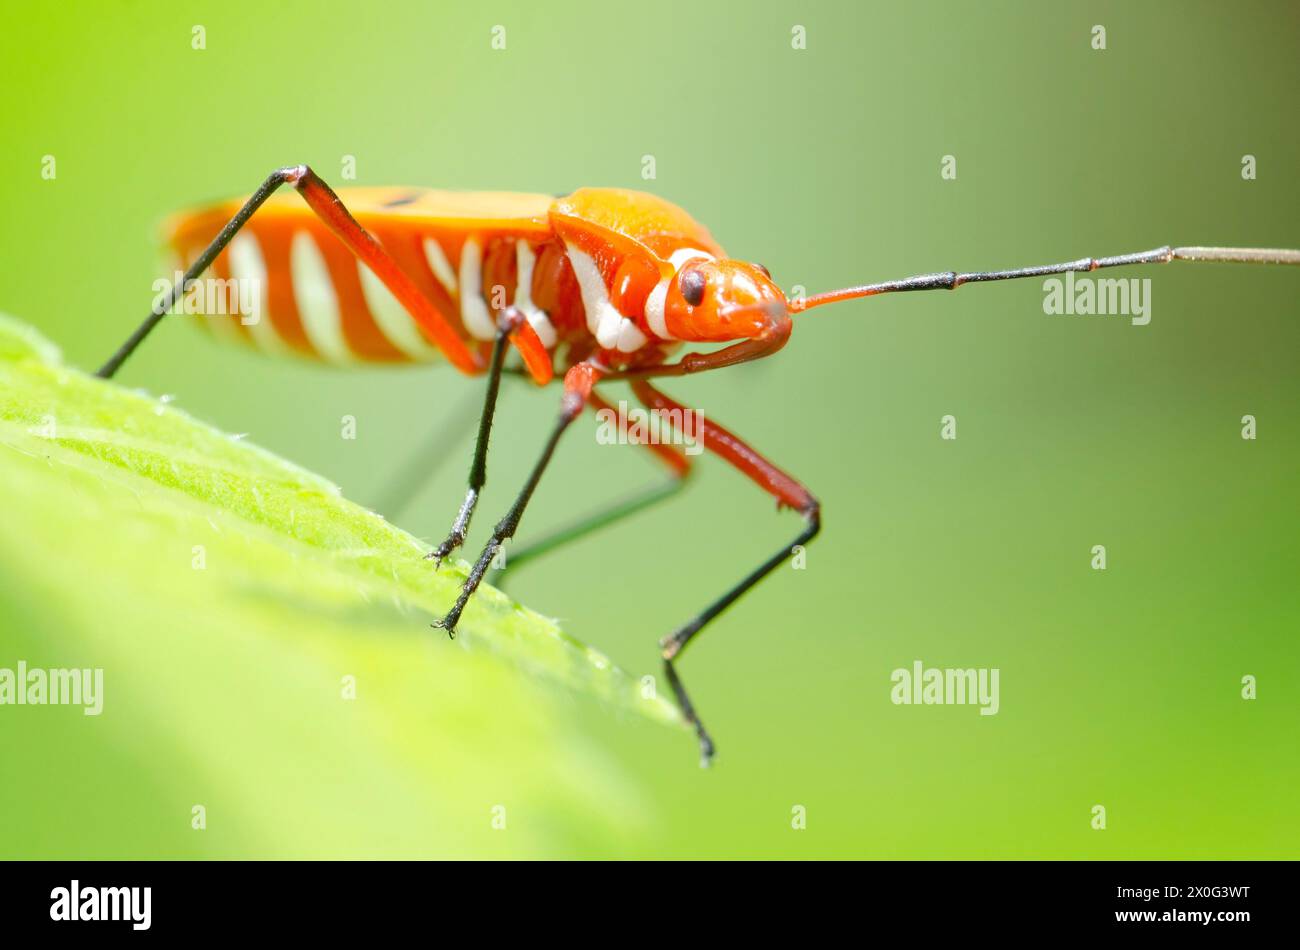 pest named stink bug or dysdercus cingulatos Stock Photo